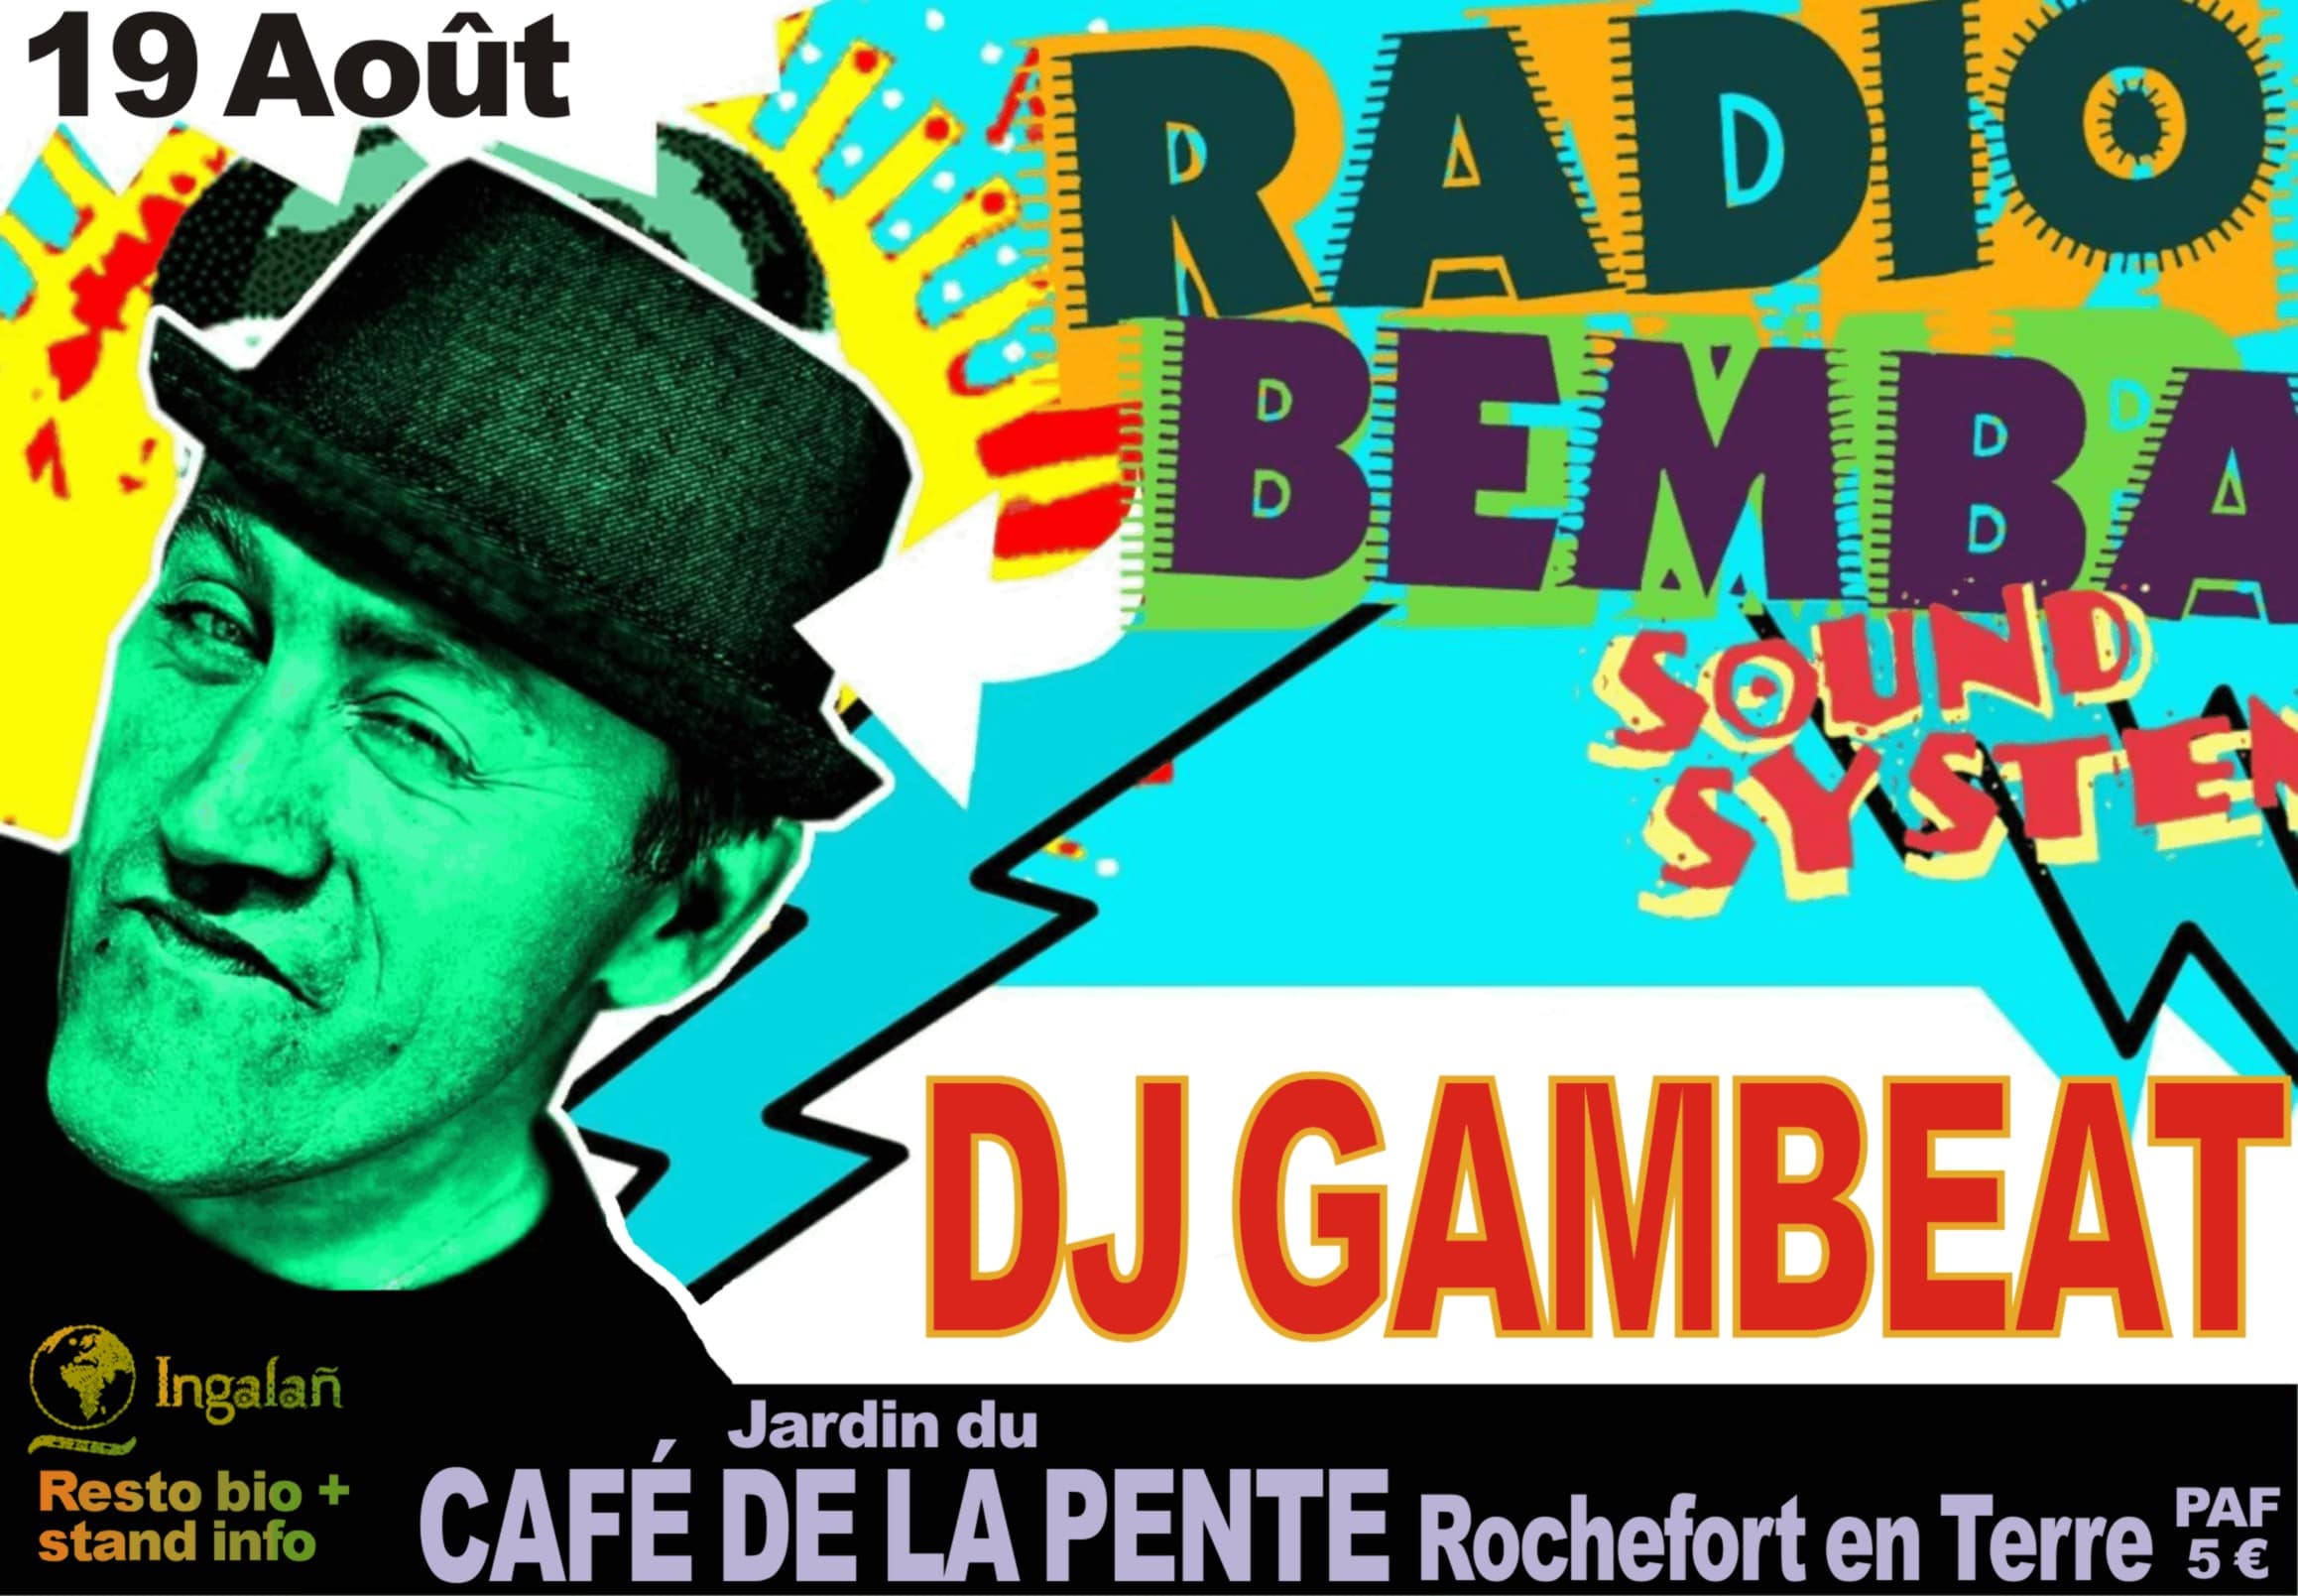 DJ GAMBEAT Radio Bemba Sound System